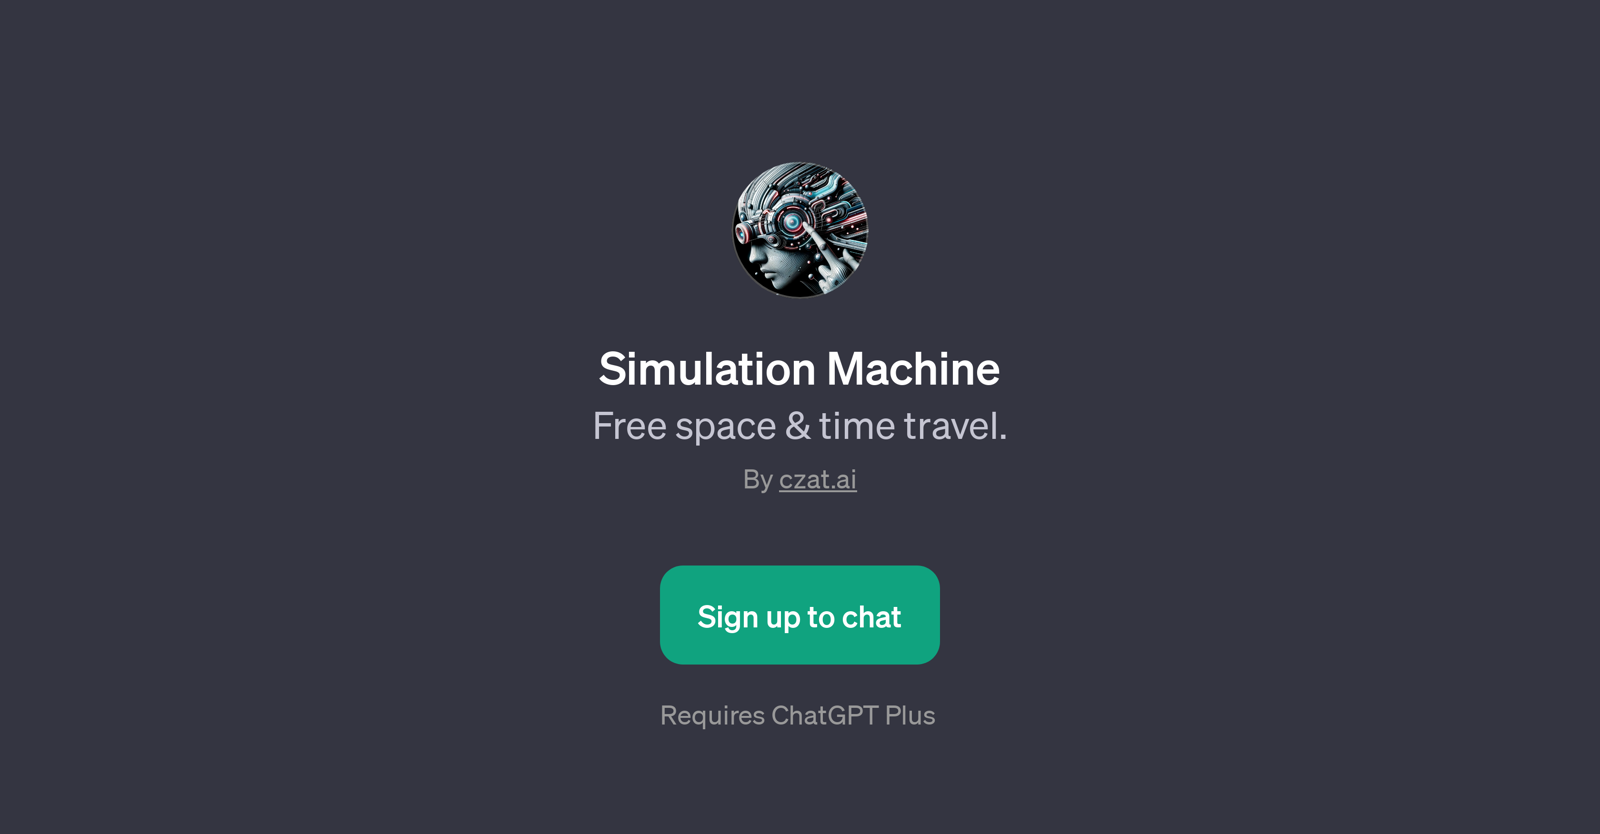 Simulation Machine website